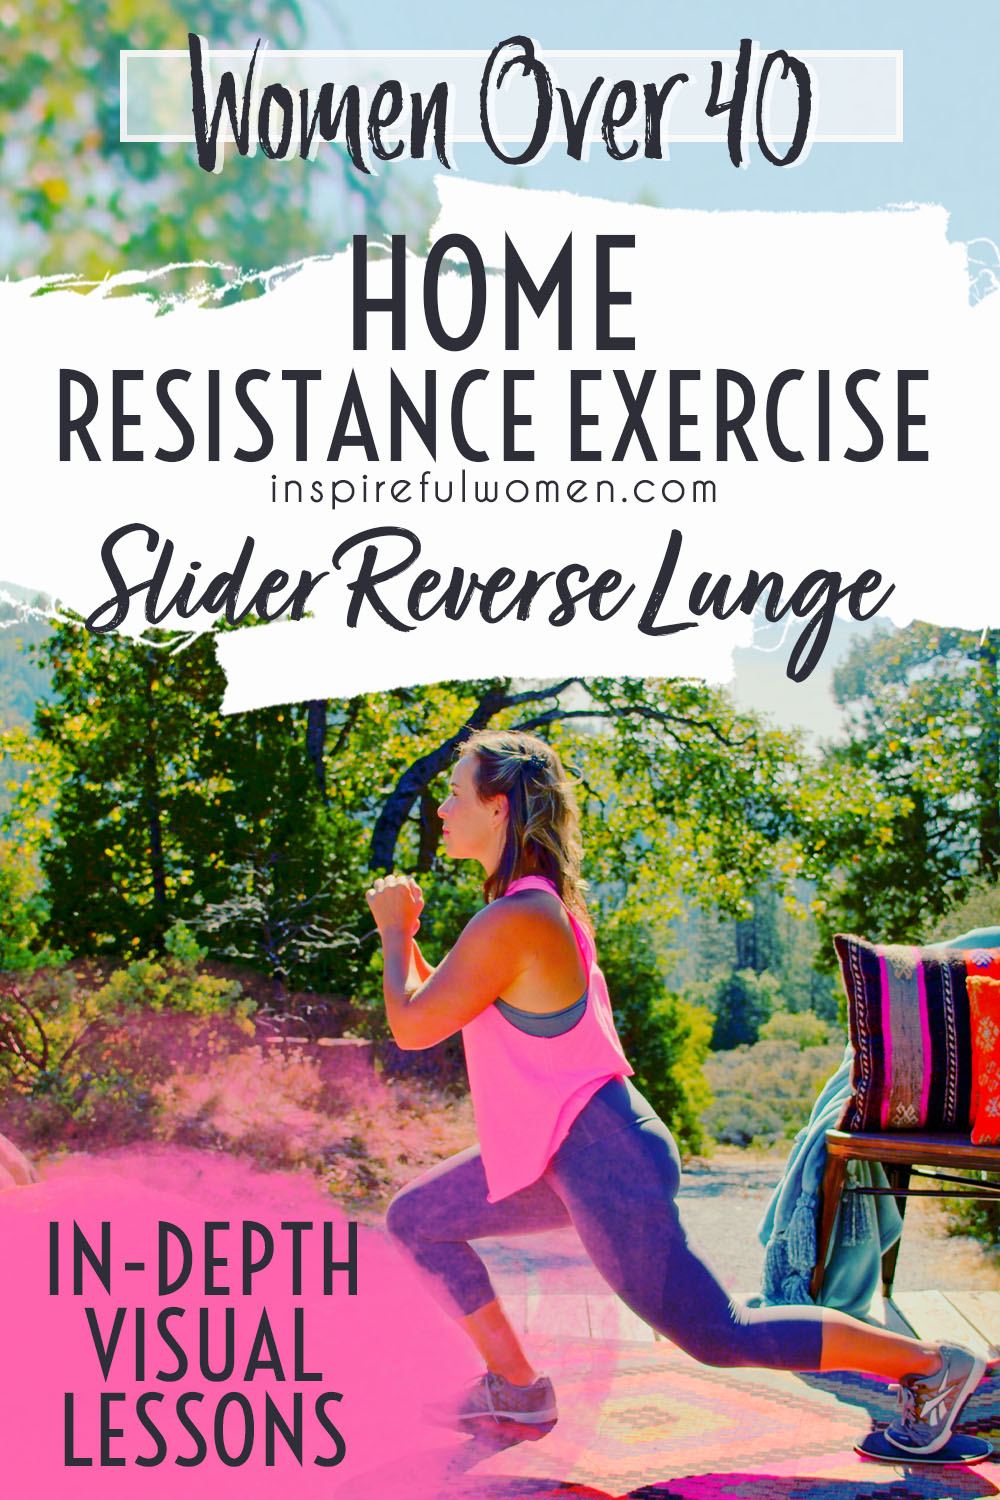 slider-reverse-lunge-one-leg-squat-alternative-glutes-quads-strengthening-exe